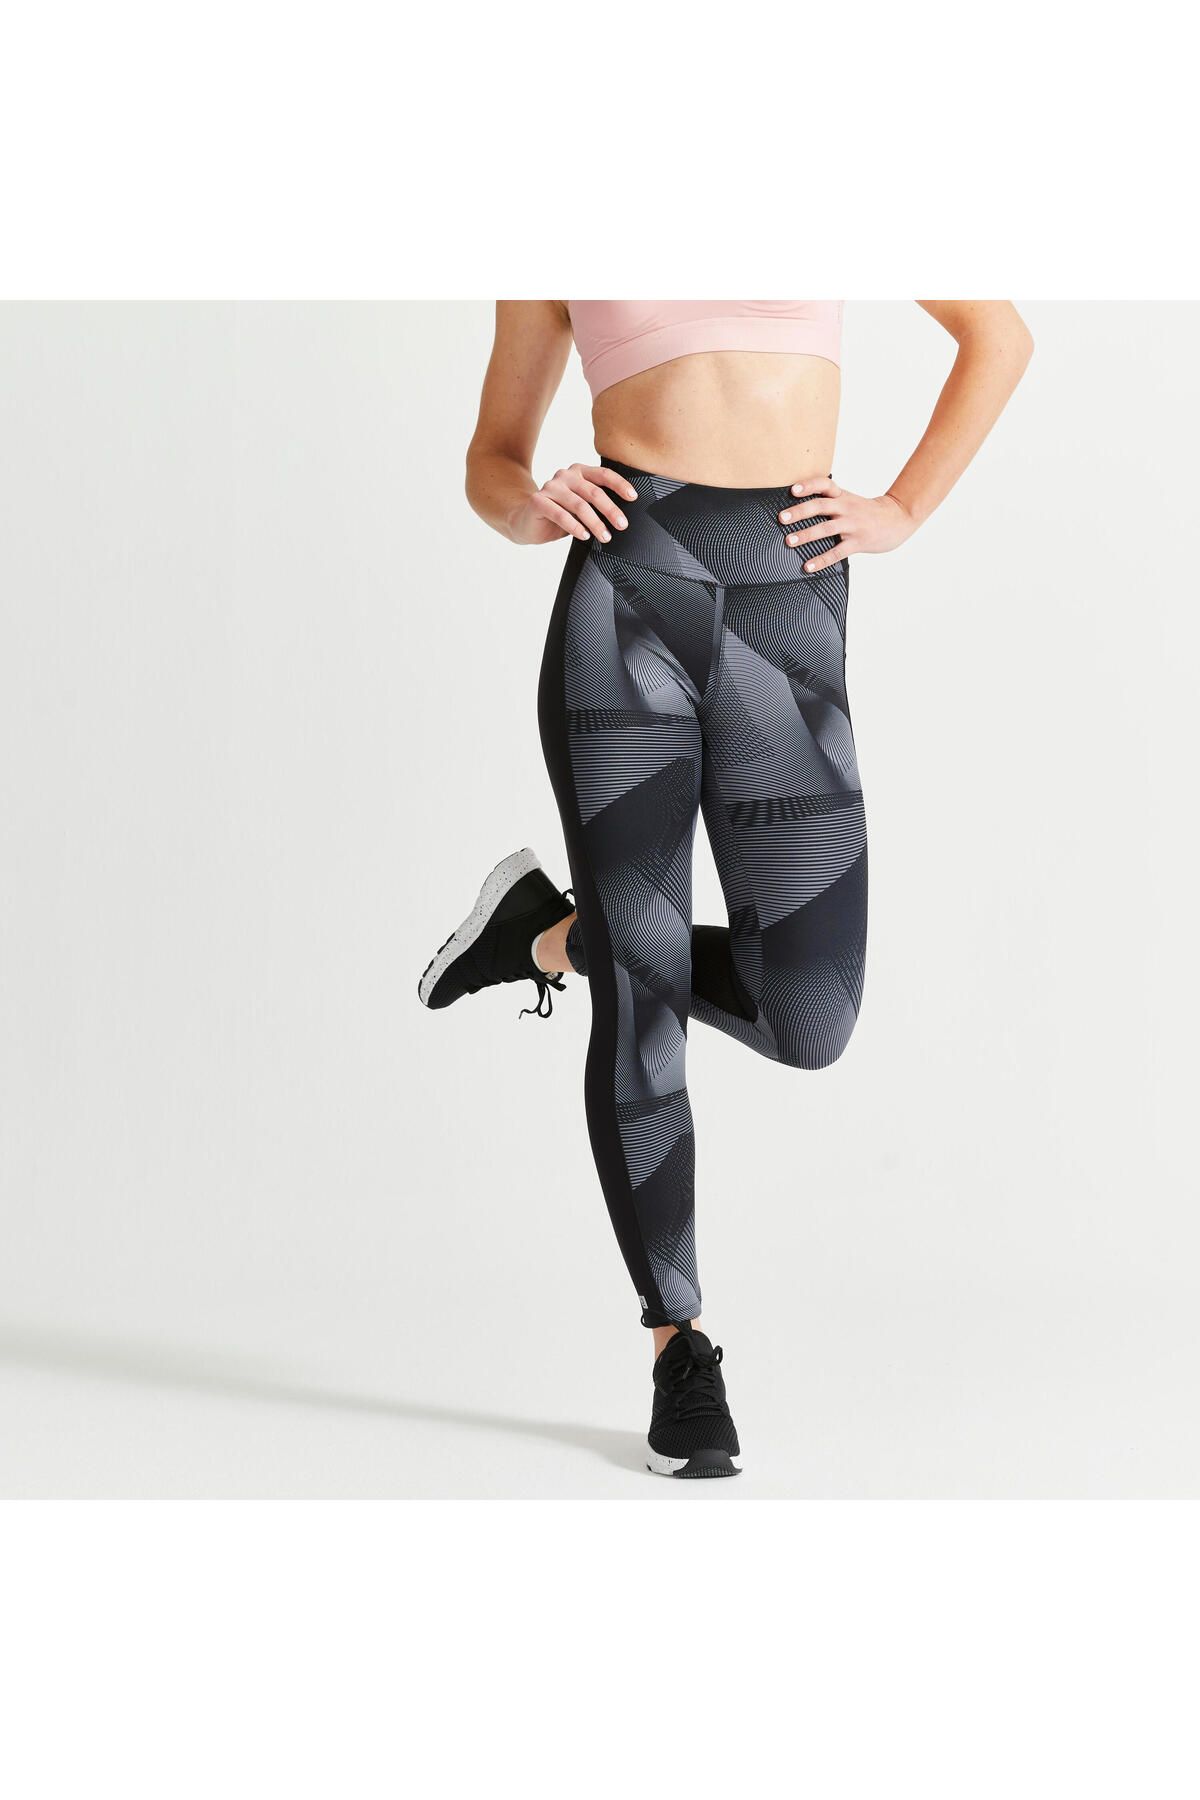 Reebok Womens Highrise Running Compression Athletic Pants, Black, Medium